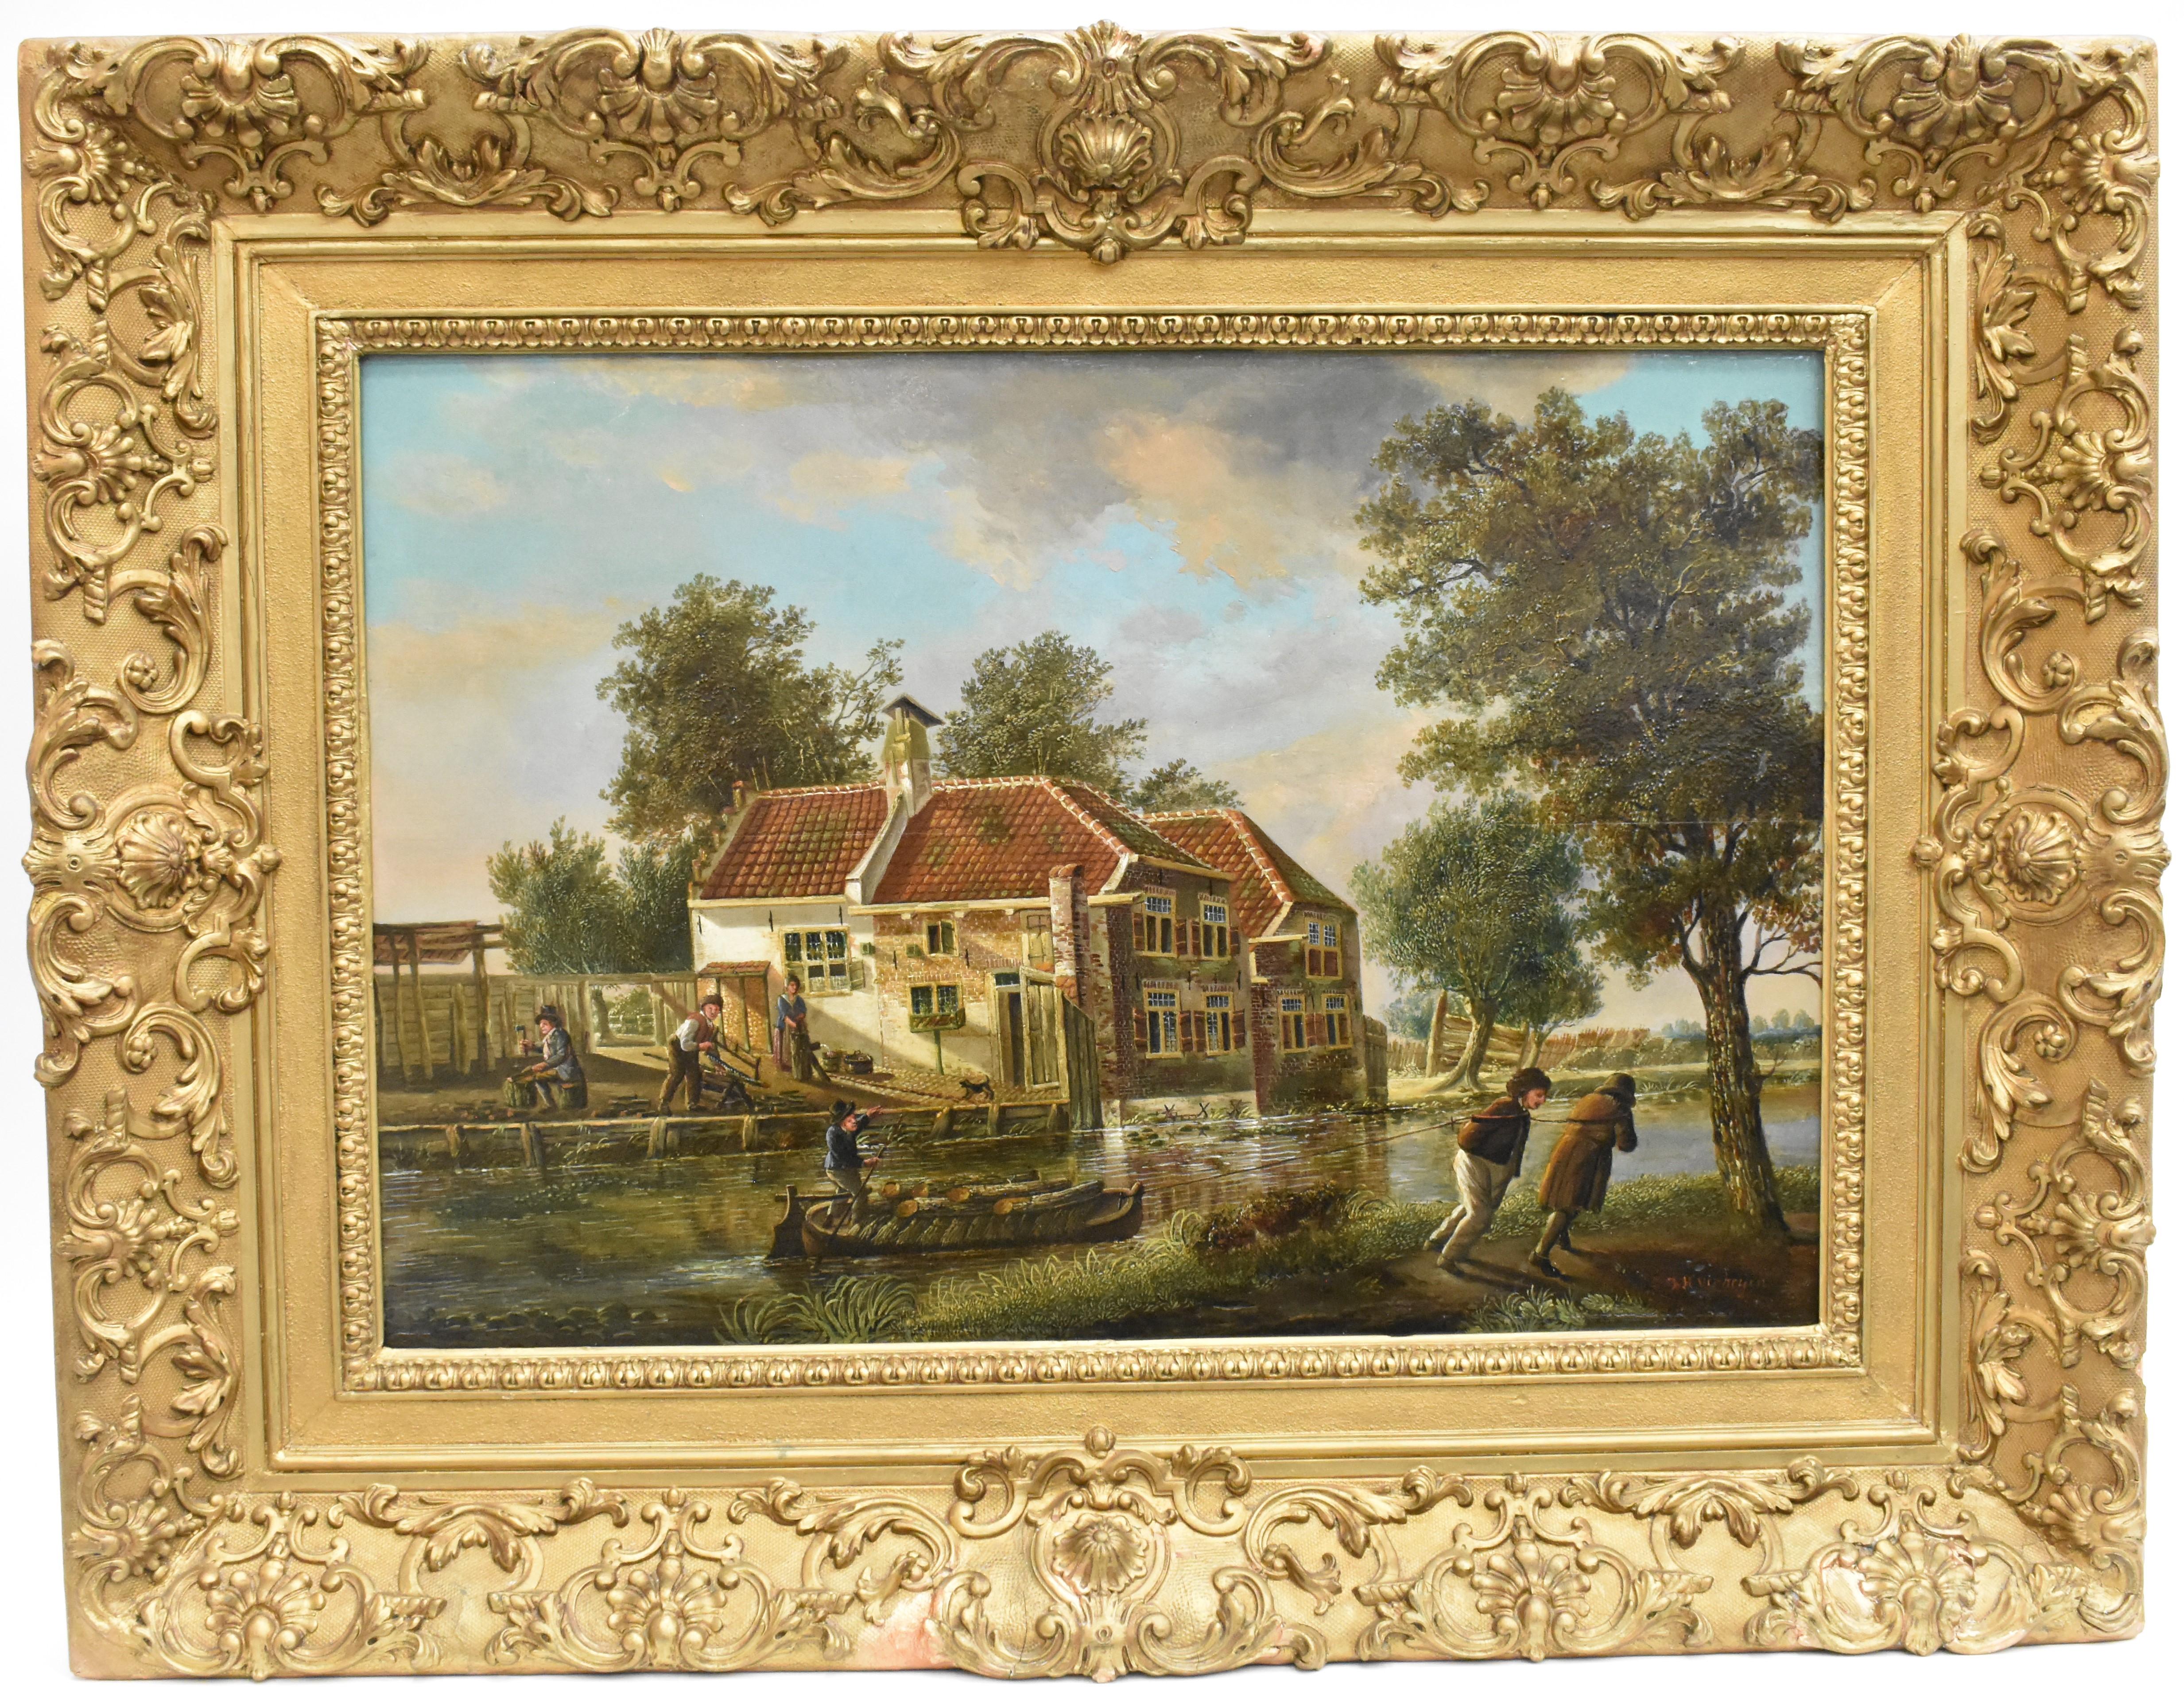 Carpenters place - J.H. verheijen Dutch Romantic Landscape  - Painting by Jan Hendrik Verheijen